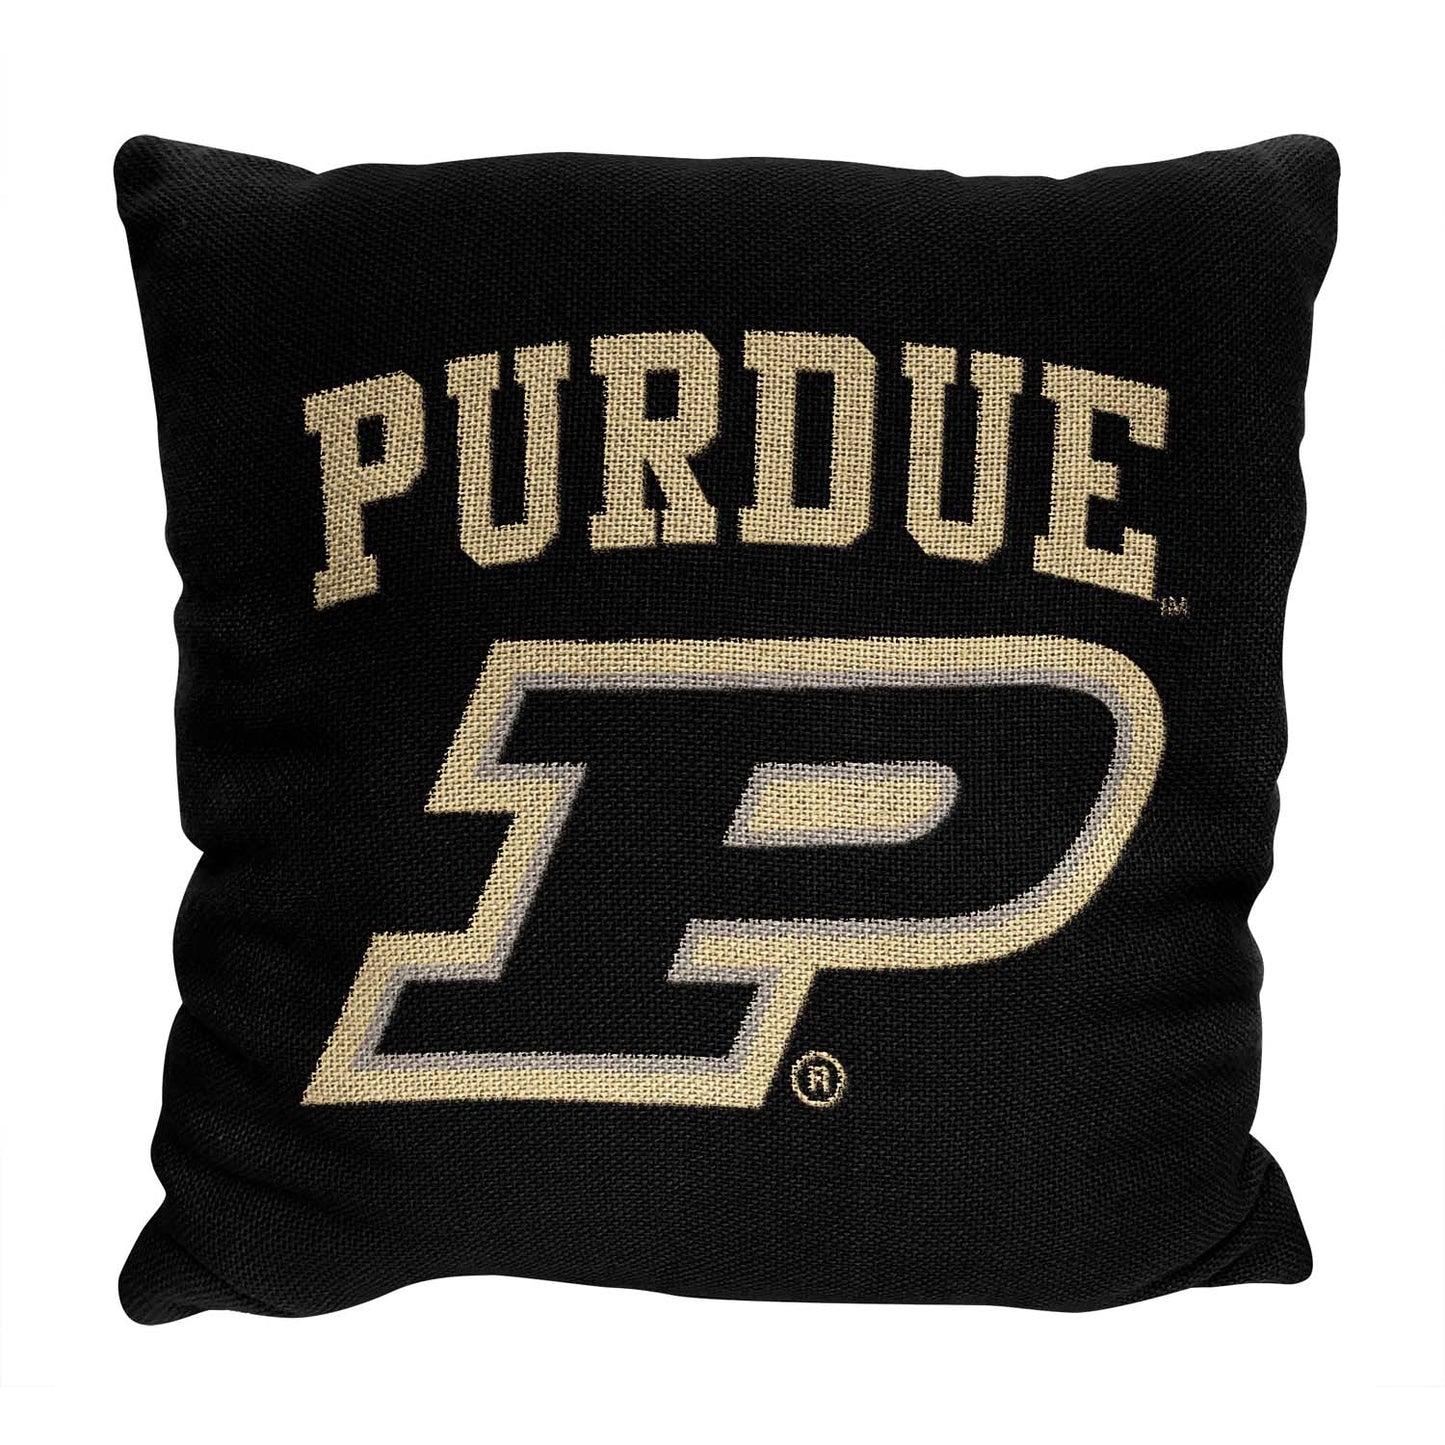 Purdue Boilermakers NCAA Decorative Pillow - Black